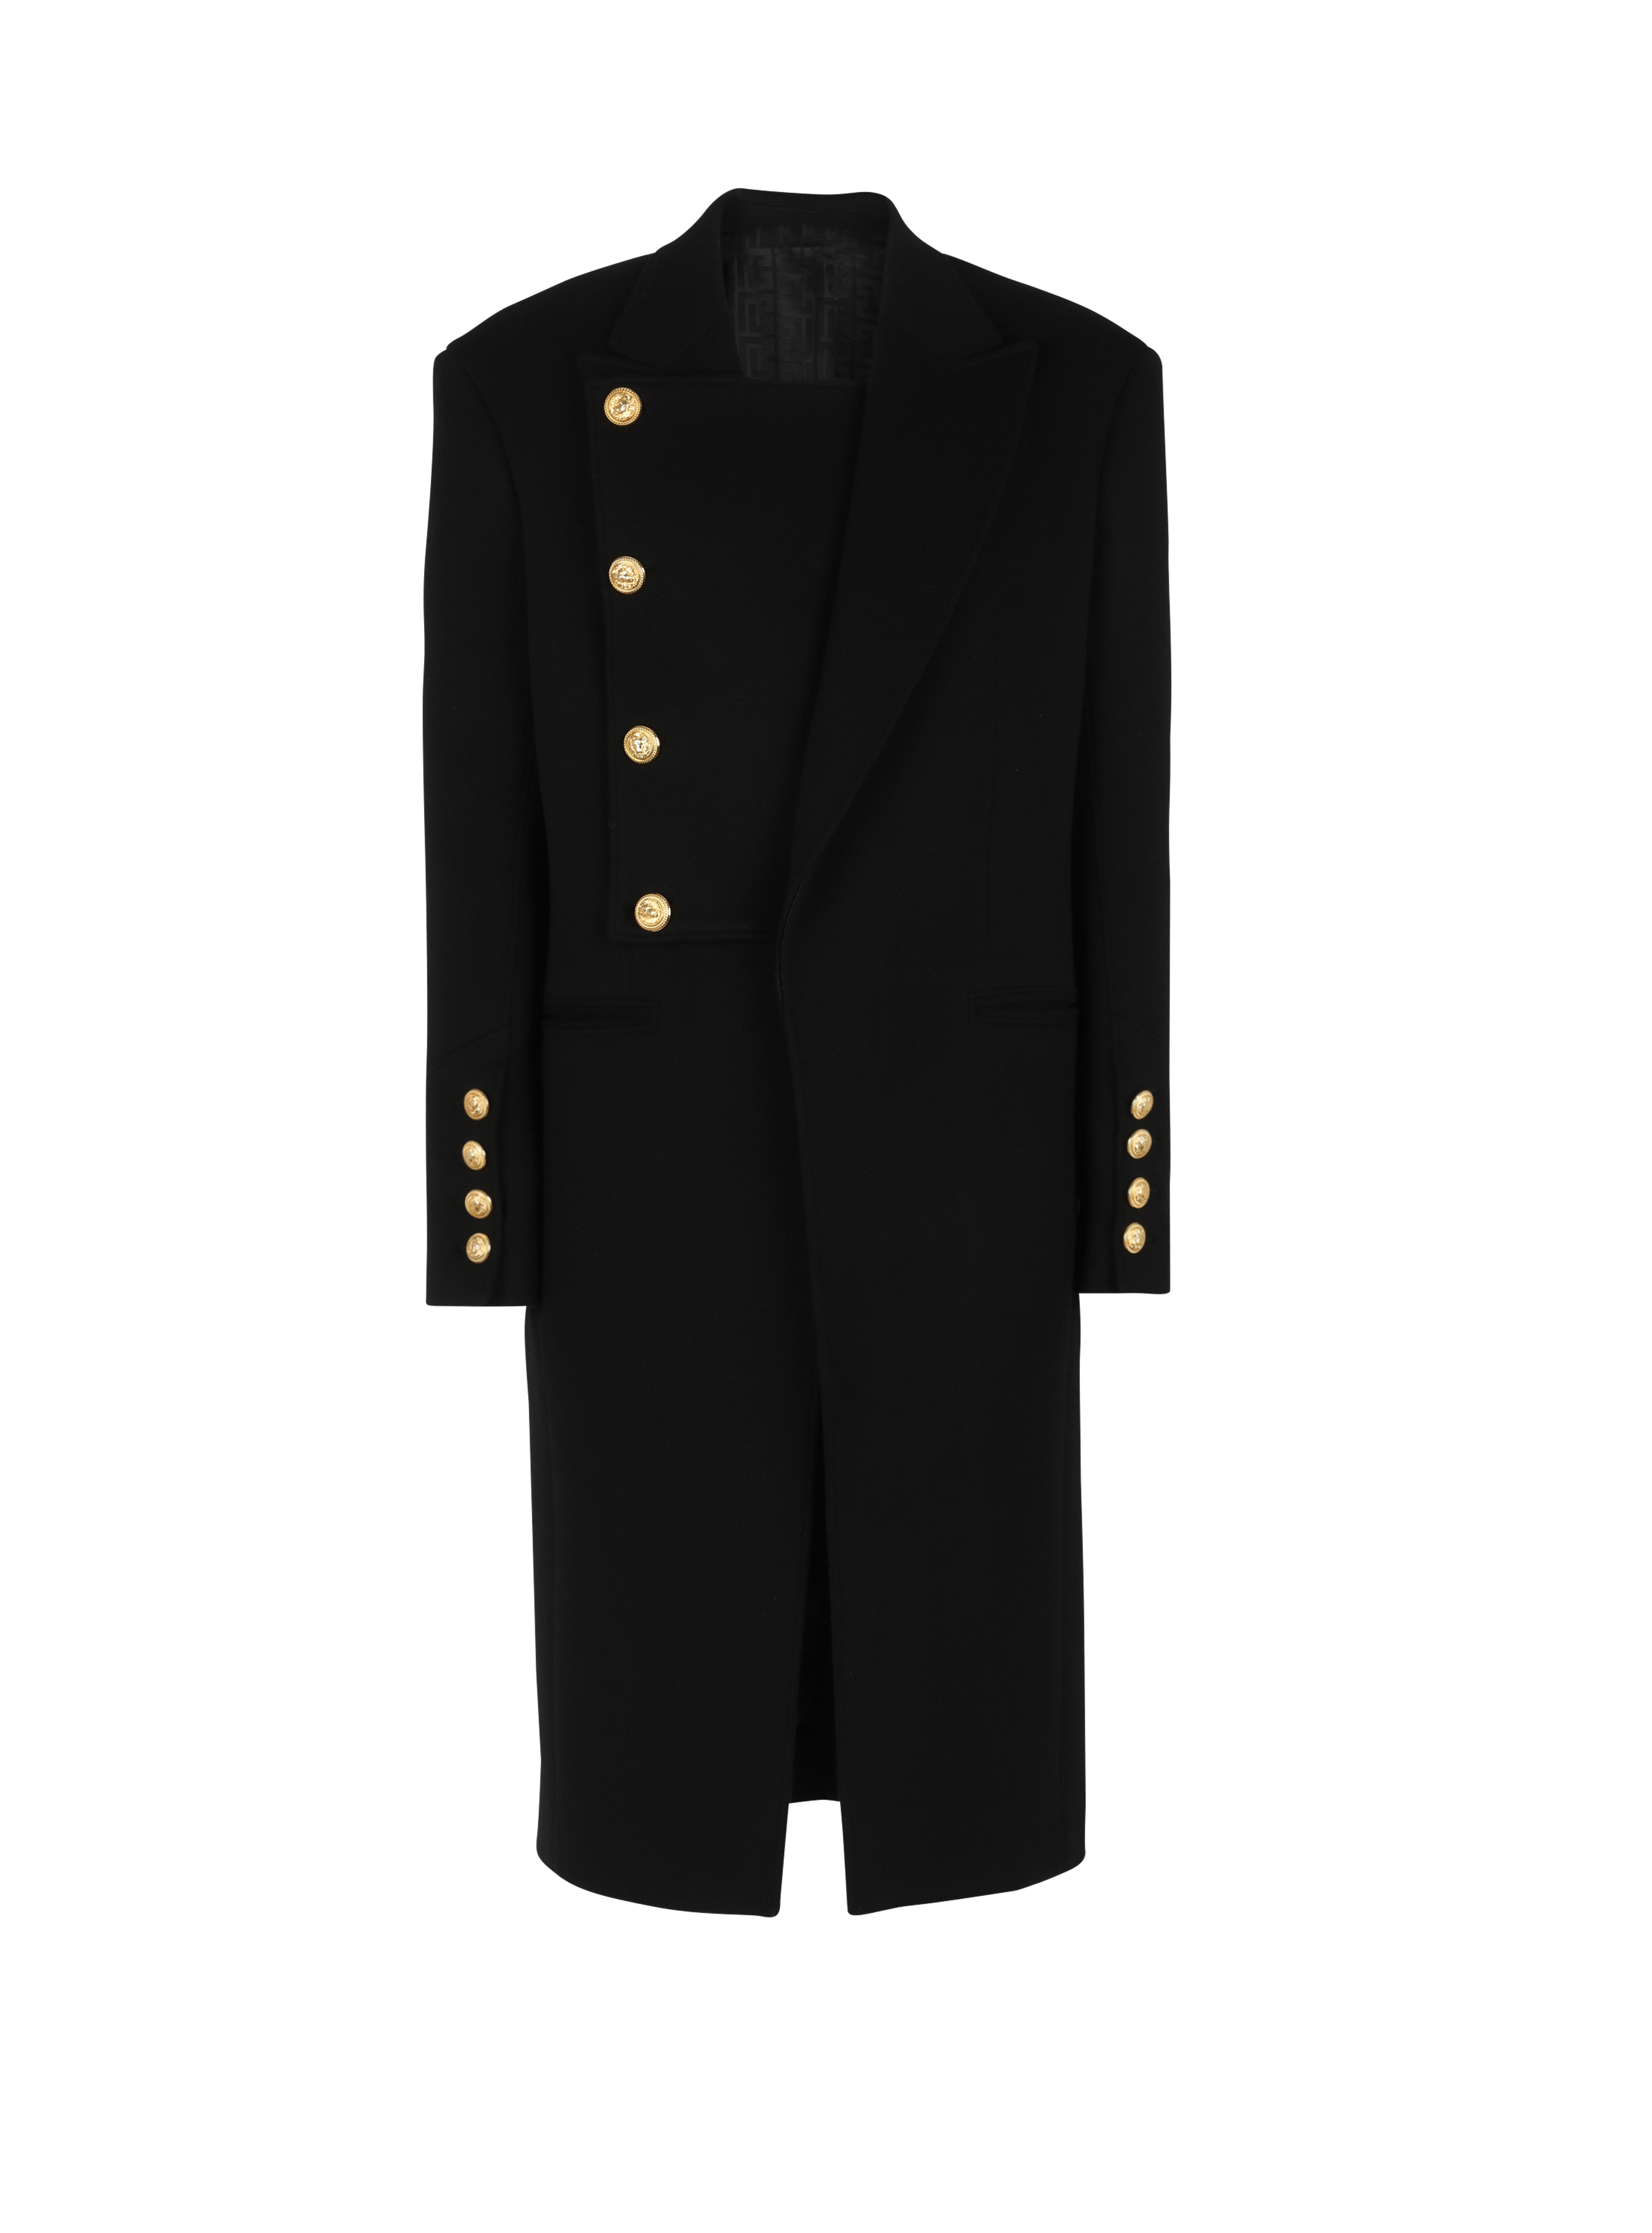 Unisex - Four-button wool coat with detachable inset jacket, black